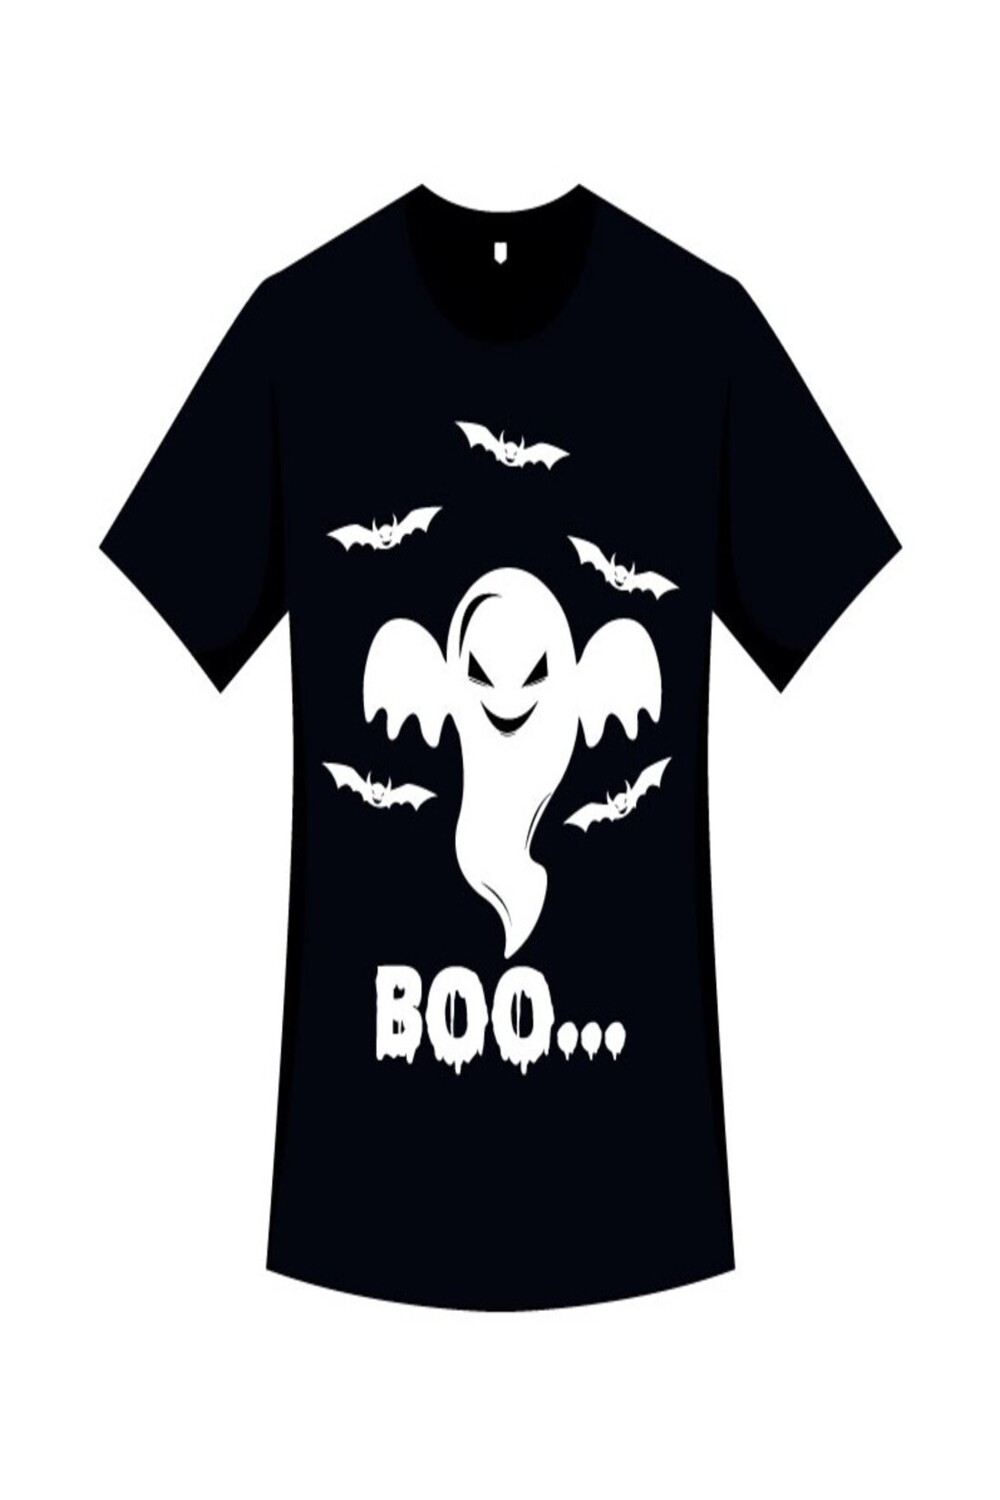 Halloween Black and White T-shirt Graphics Pinterest image.